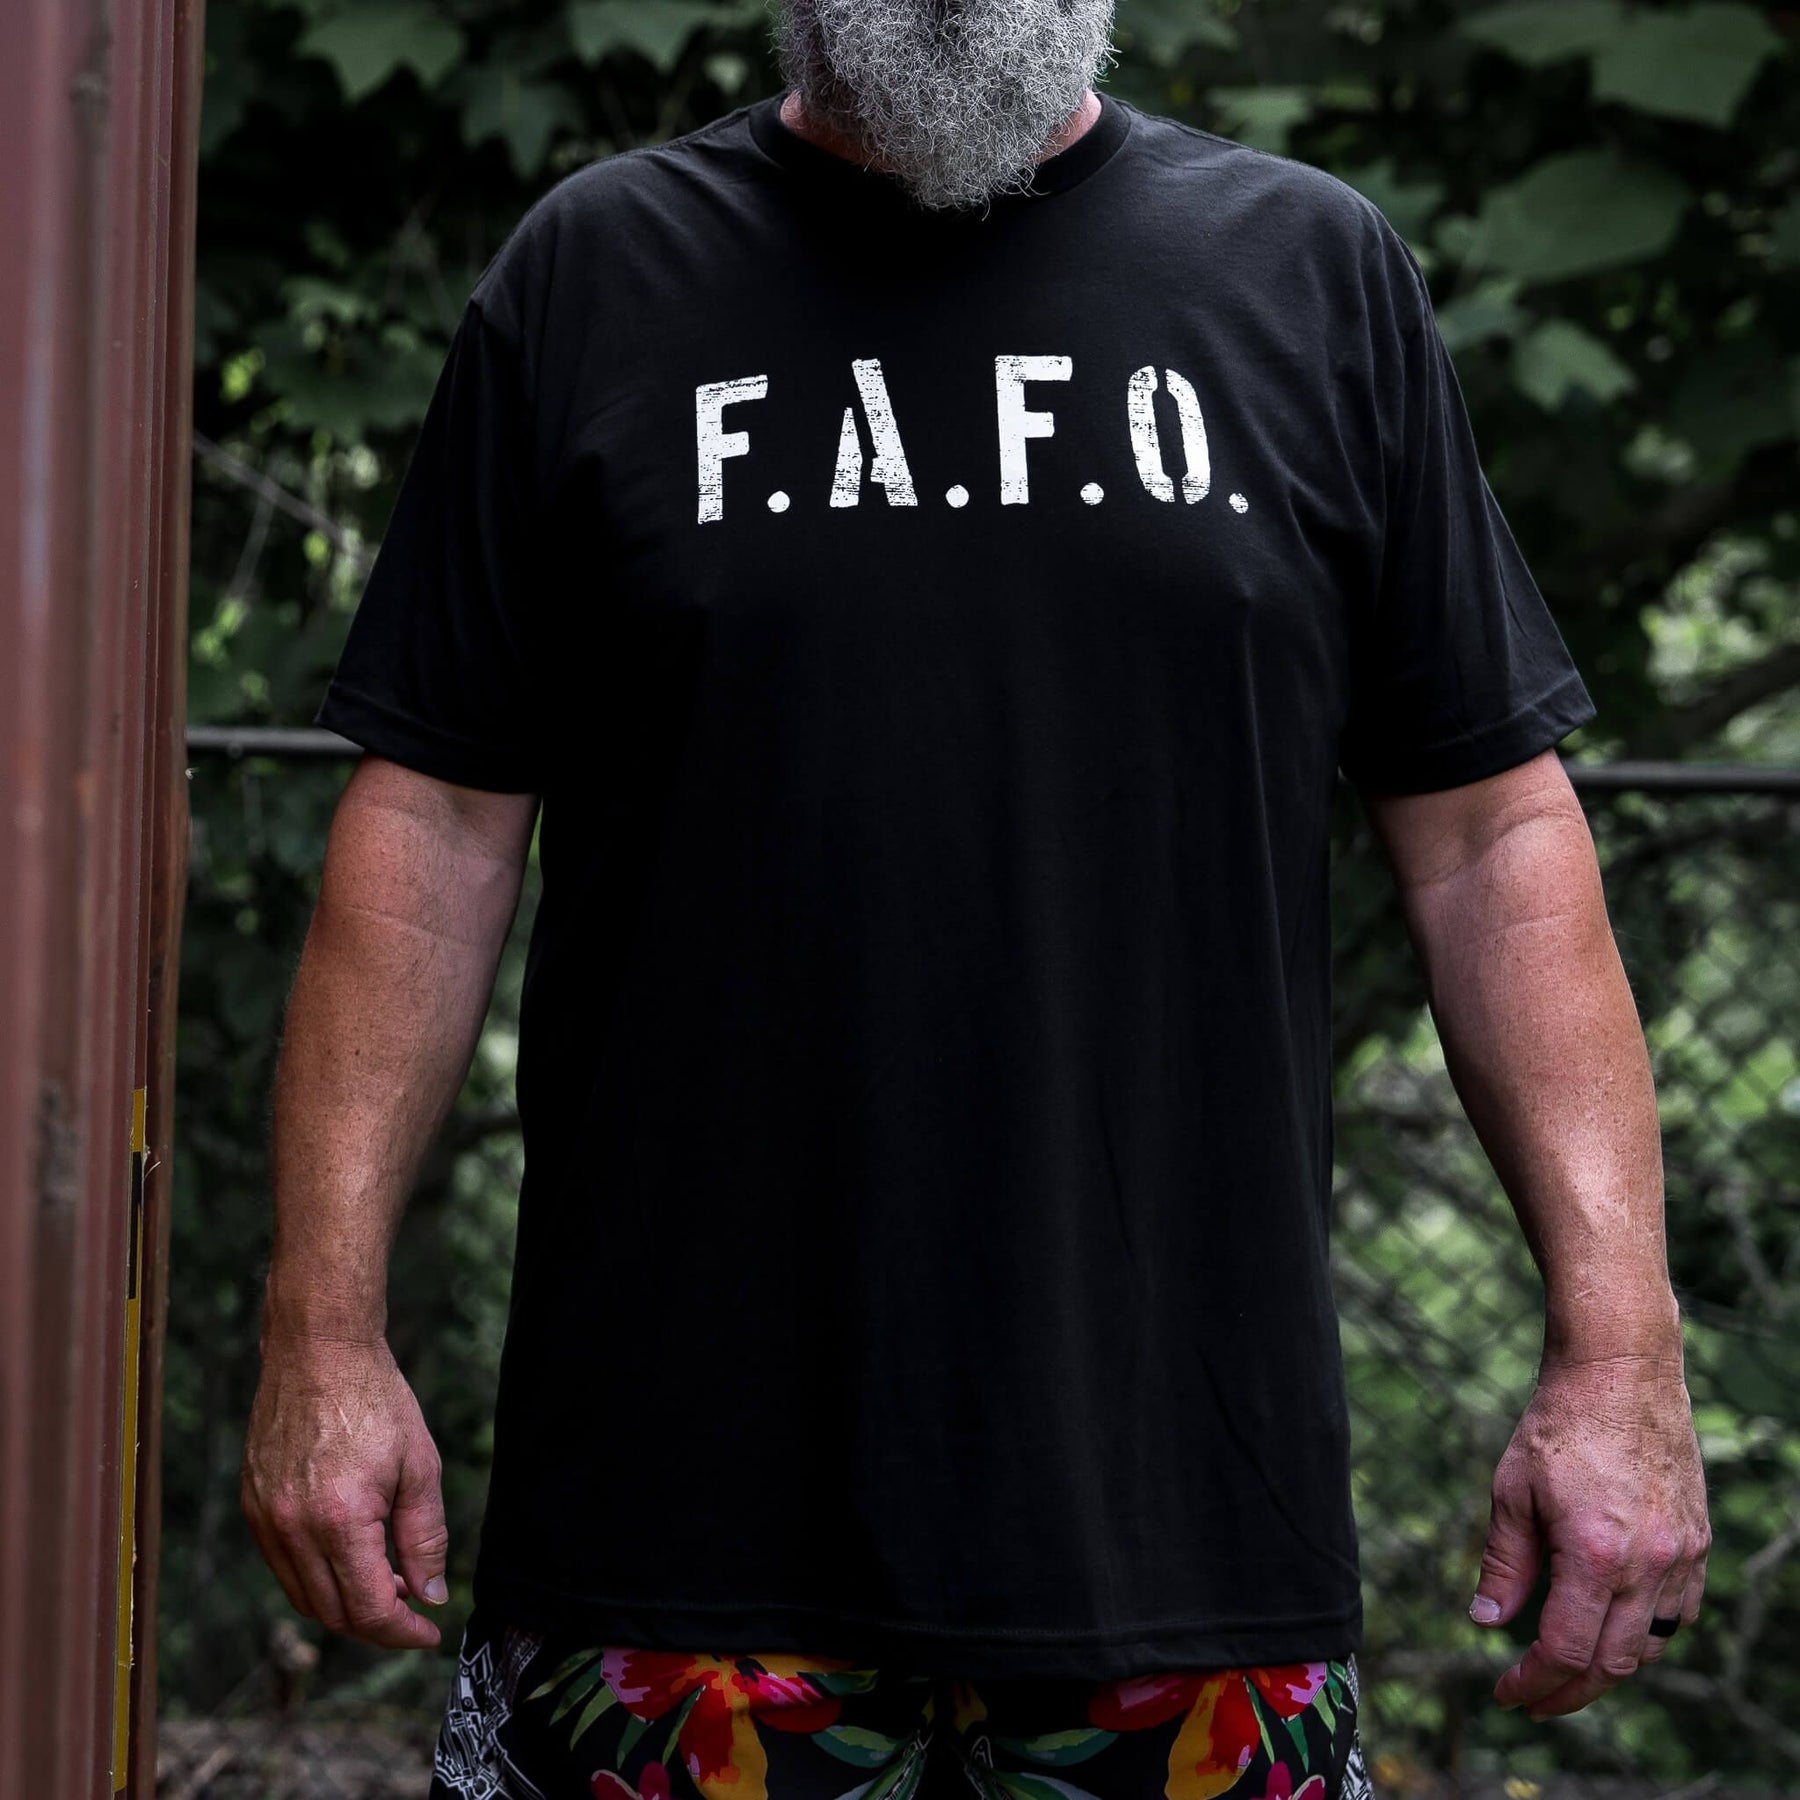 FAFO Men’s T-shirt | Combat Iron Apparel Co.